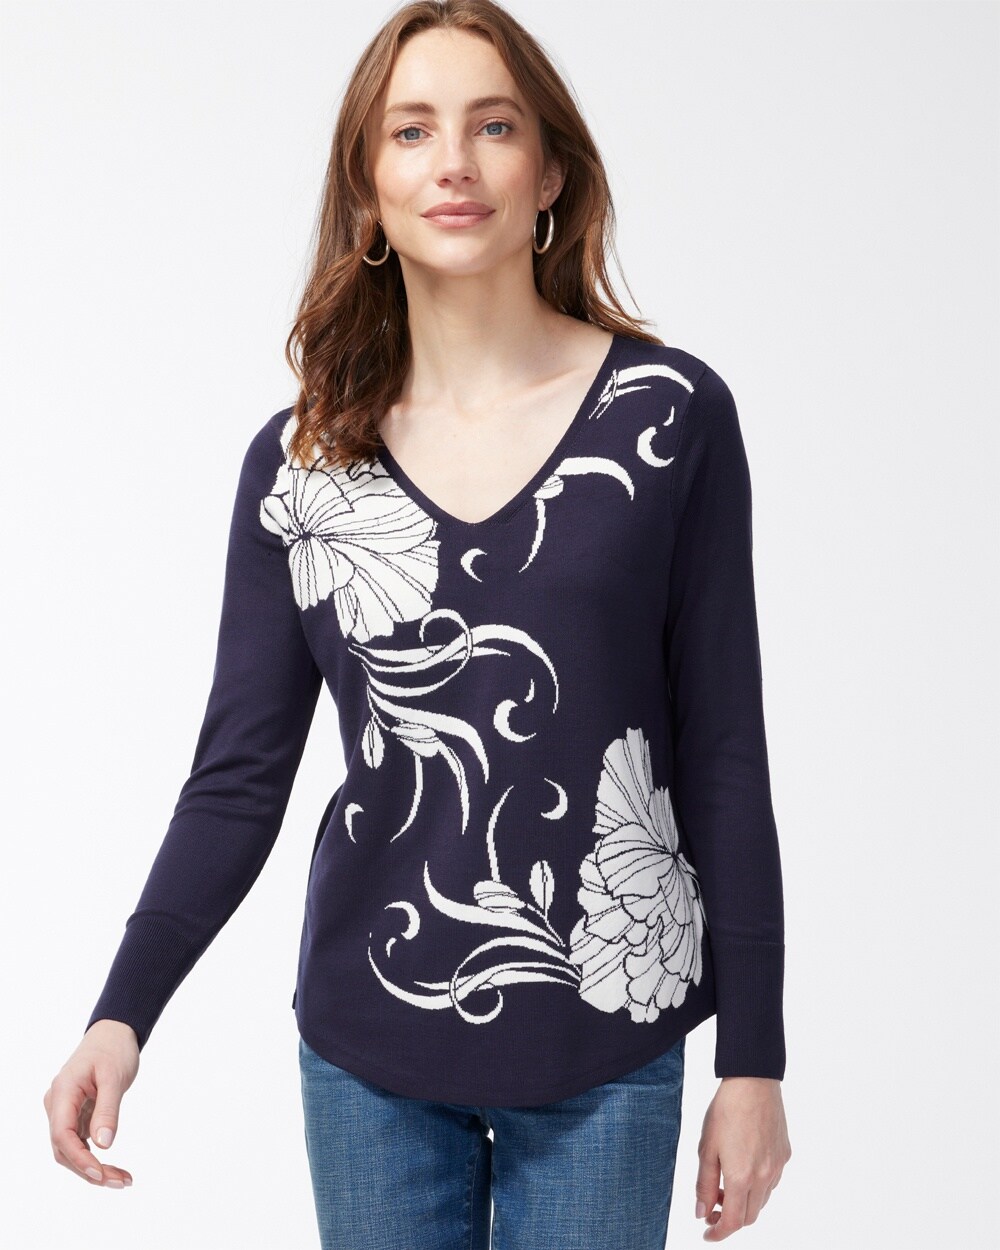 Spun Rayon Floral Sweater